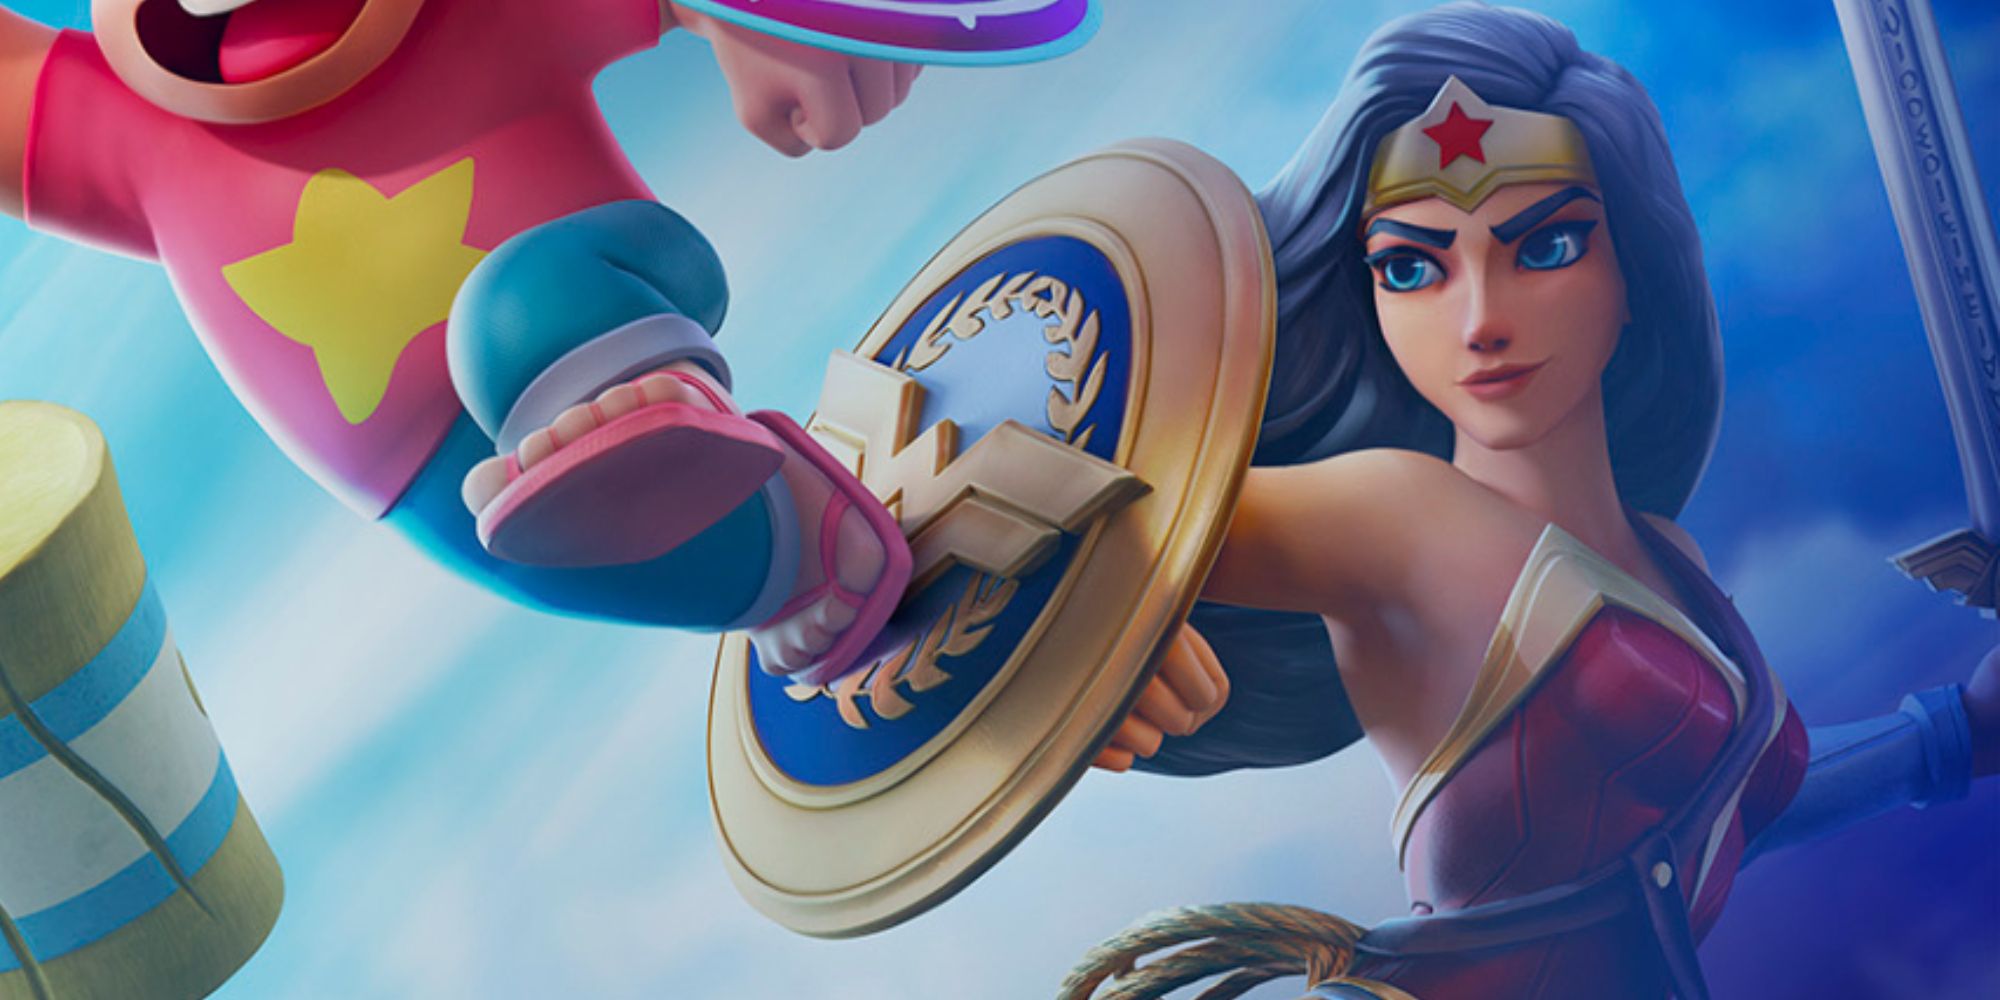 Wonder Woman assisting Steven Universe in official banner for MultiVersus